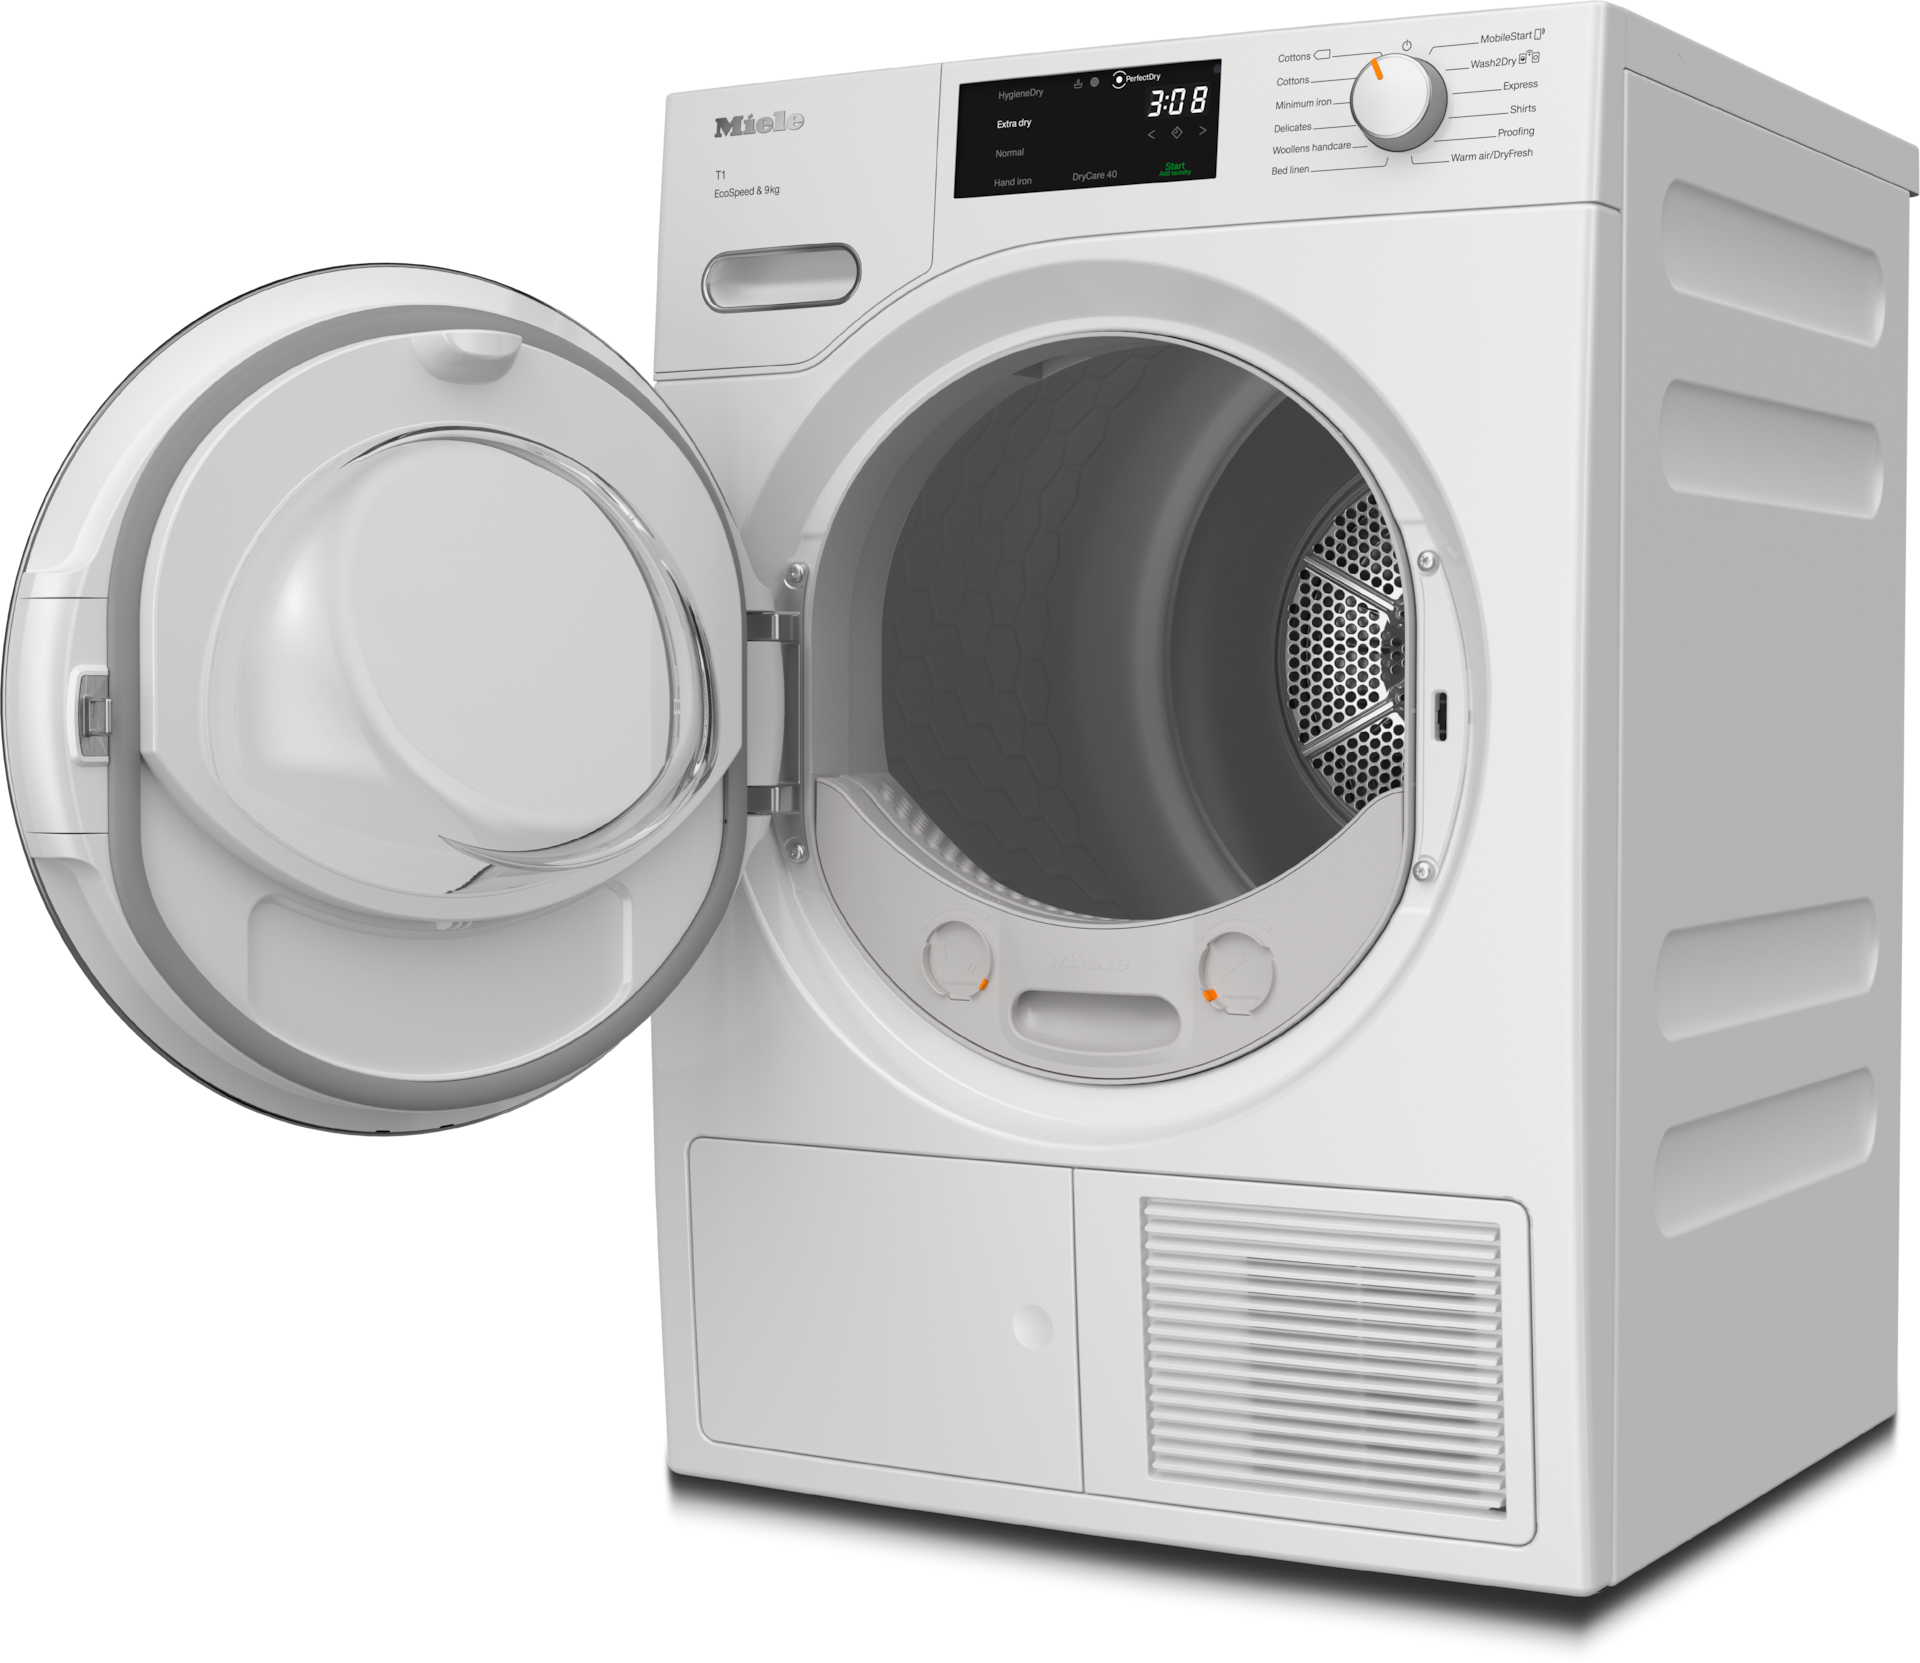 Tumble dryers - TWH780WP EcoSpeed&9kg Lotus white - 2